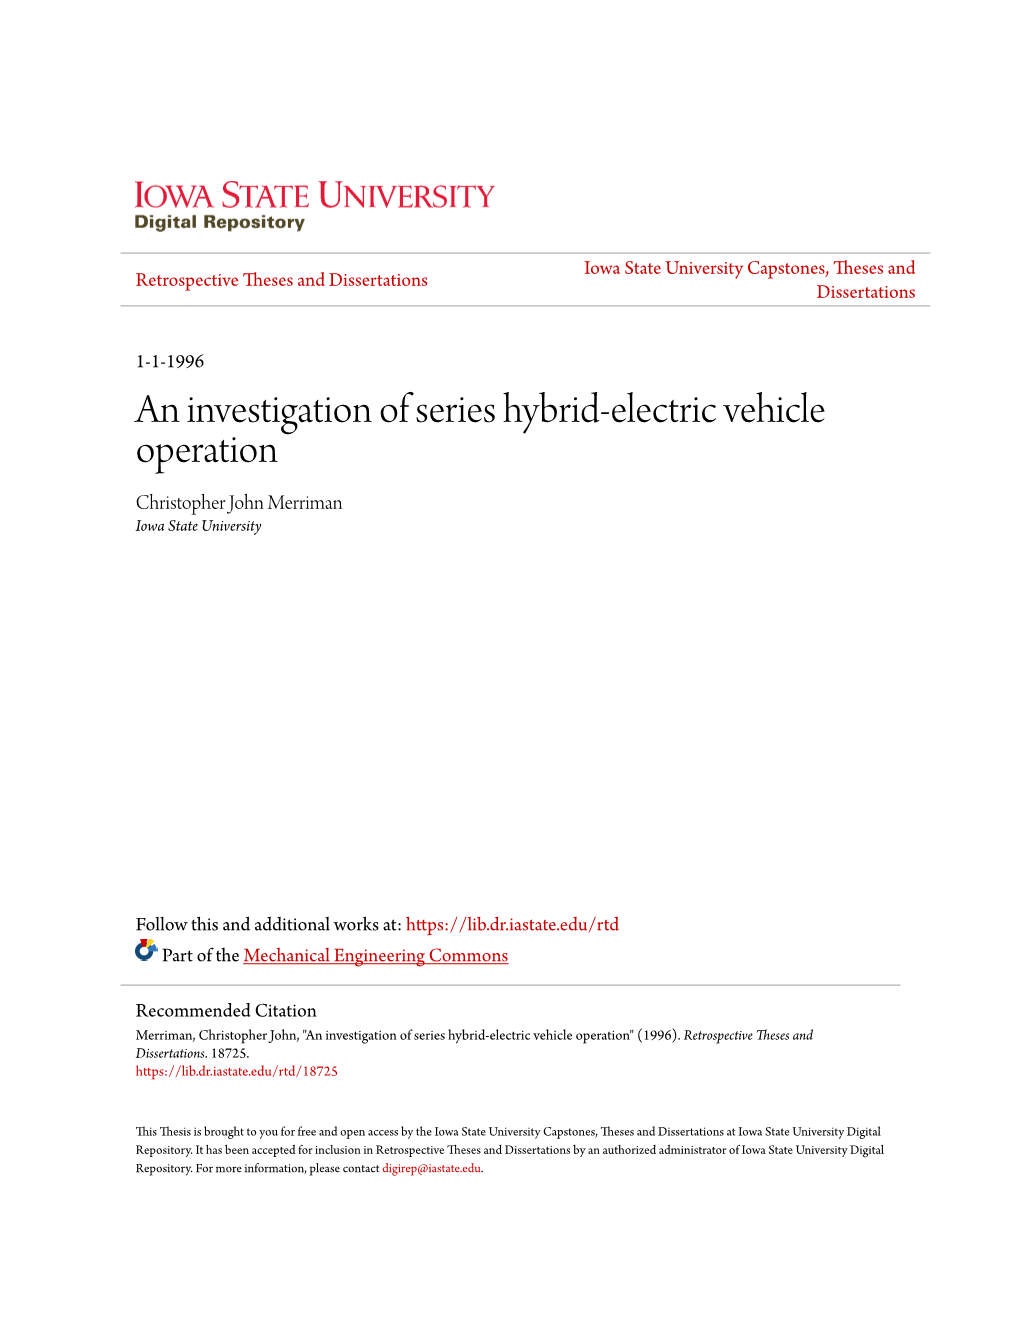 An Investigation of Series Hybrid-Electric Vehicle Operation Christopher John Merriman Iowa State University